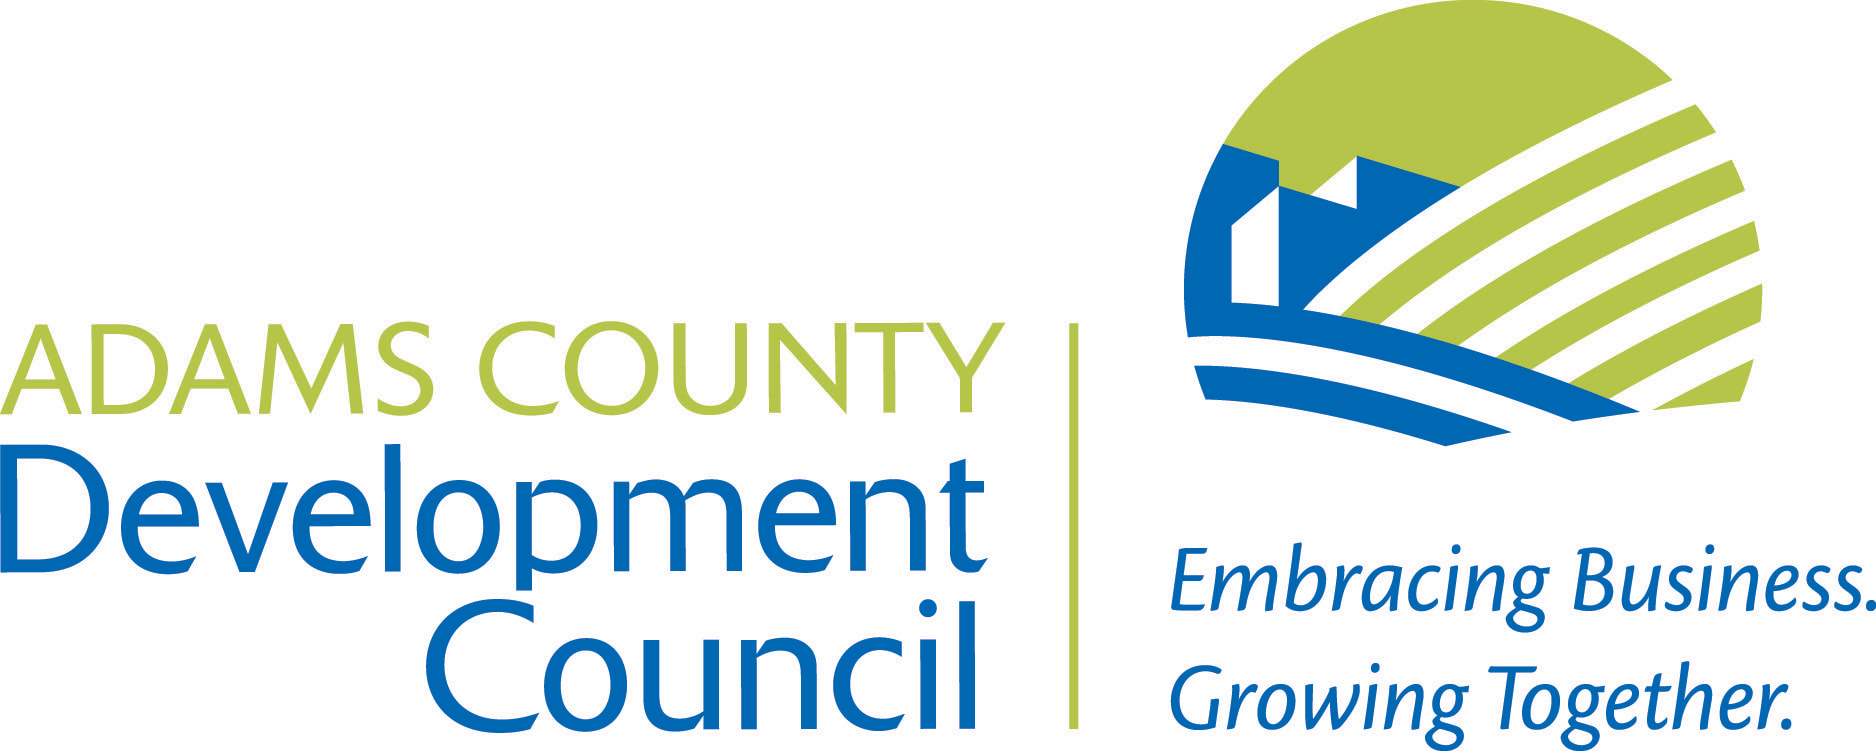 Adams County Development Council